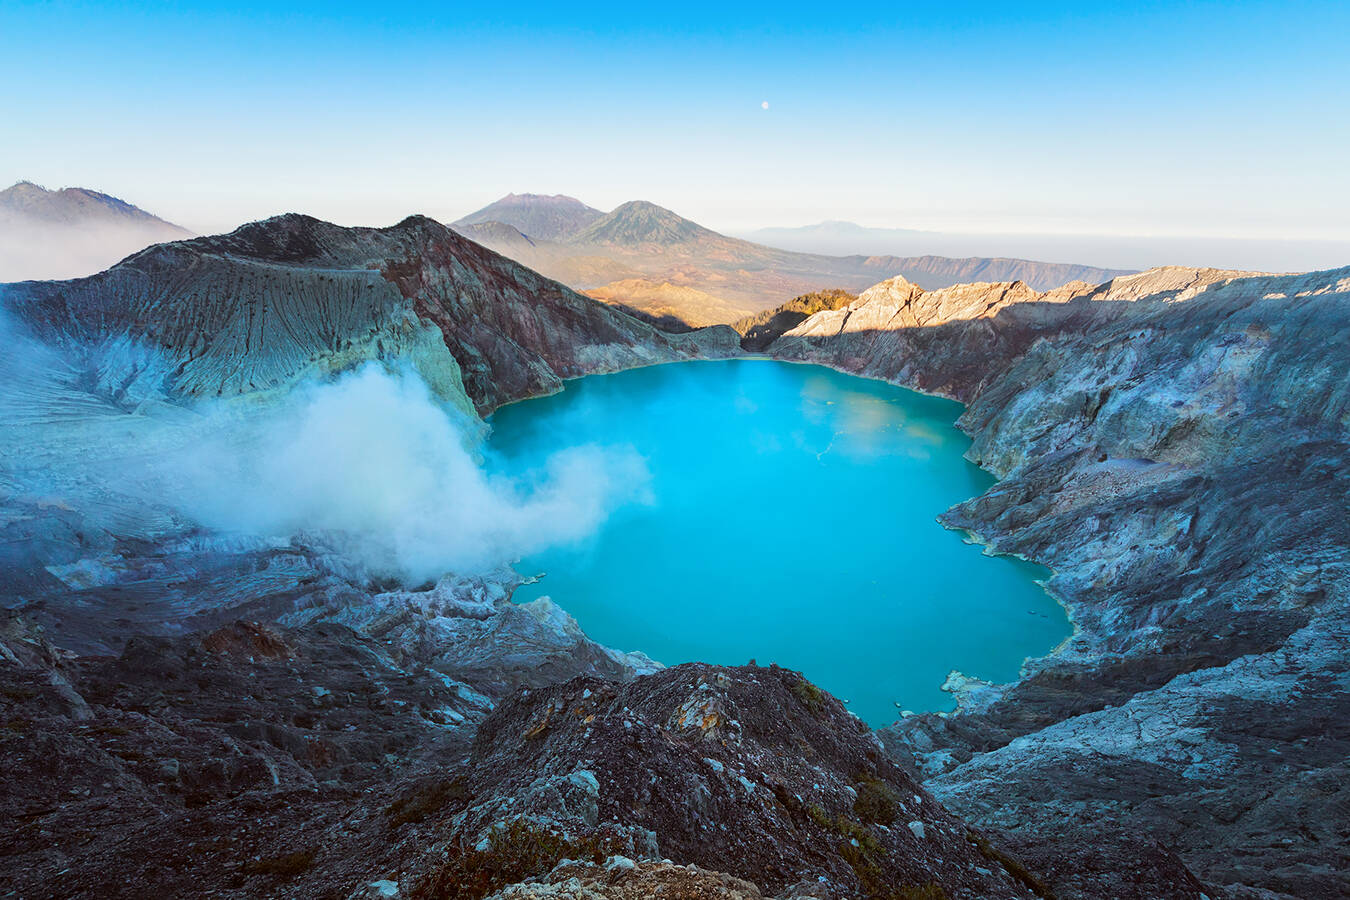 Sulfuric Acid lake in Peru